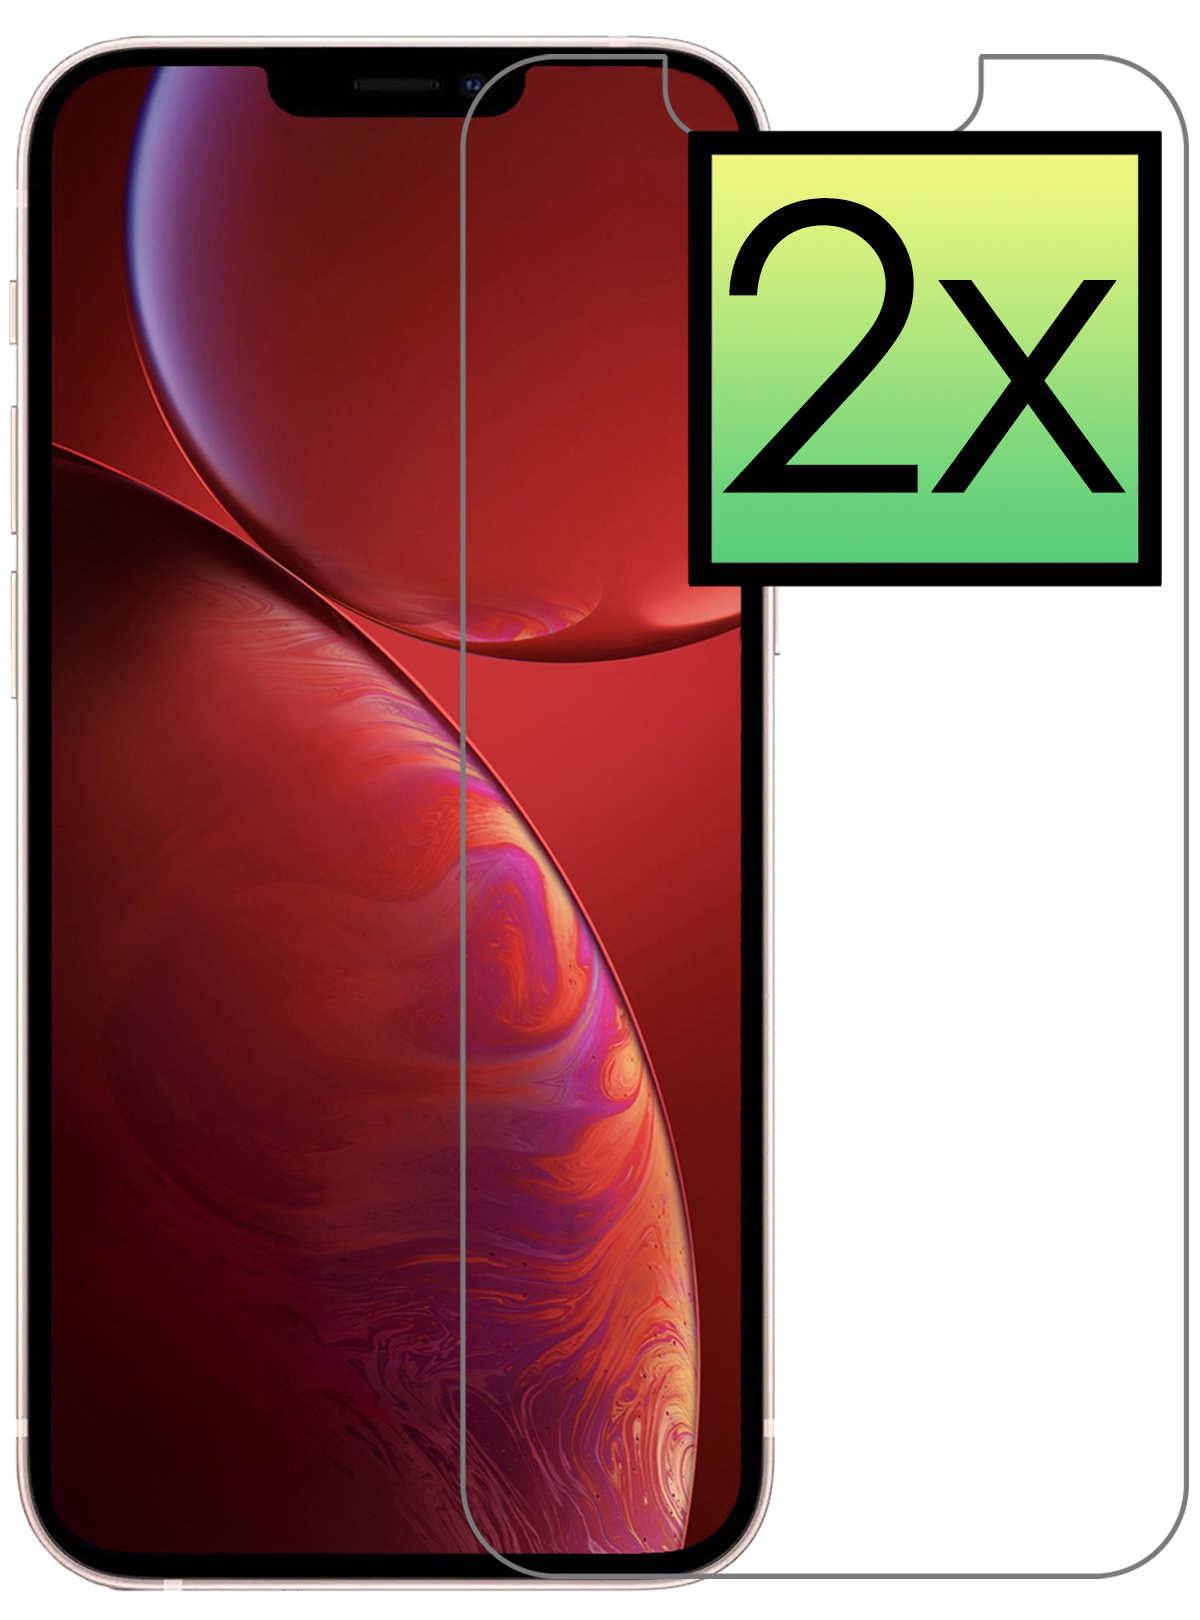 NoXx Screenprotector voor iPhone 14 Pro Max Screenprotector Tempered Glass Gehard Glas Display Cover - 2x